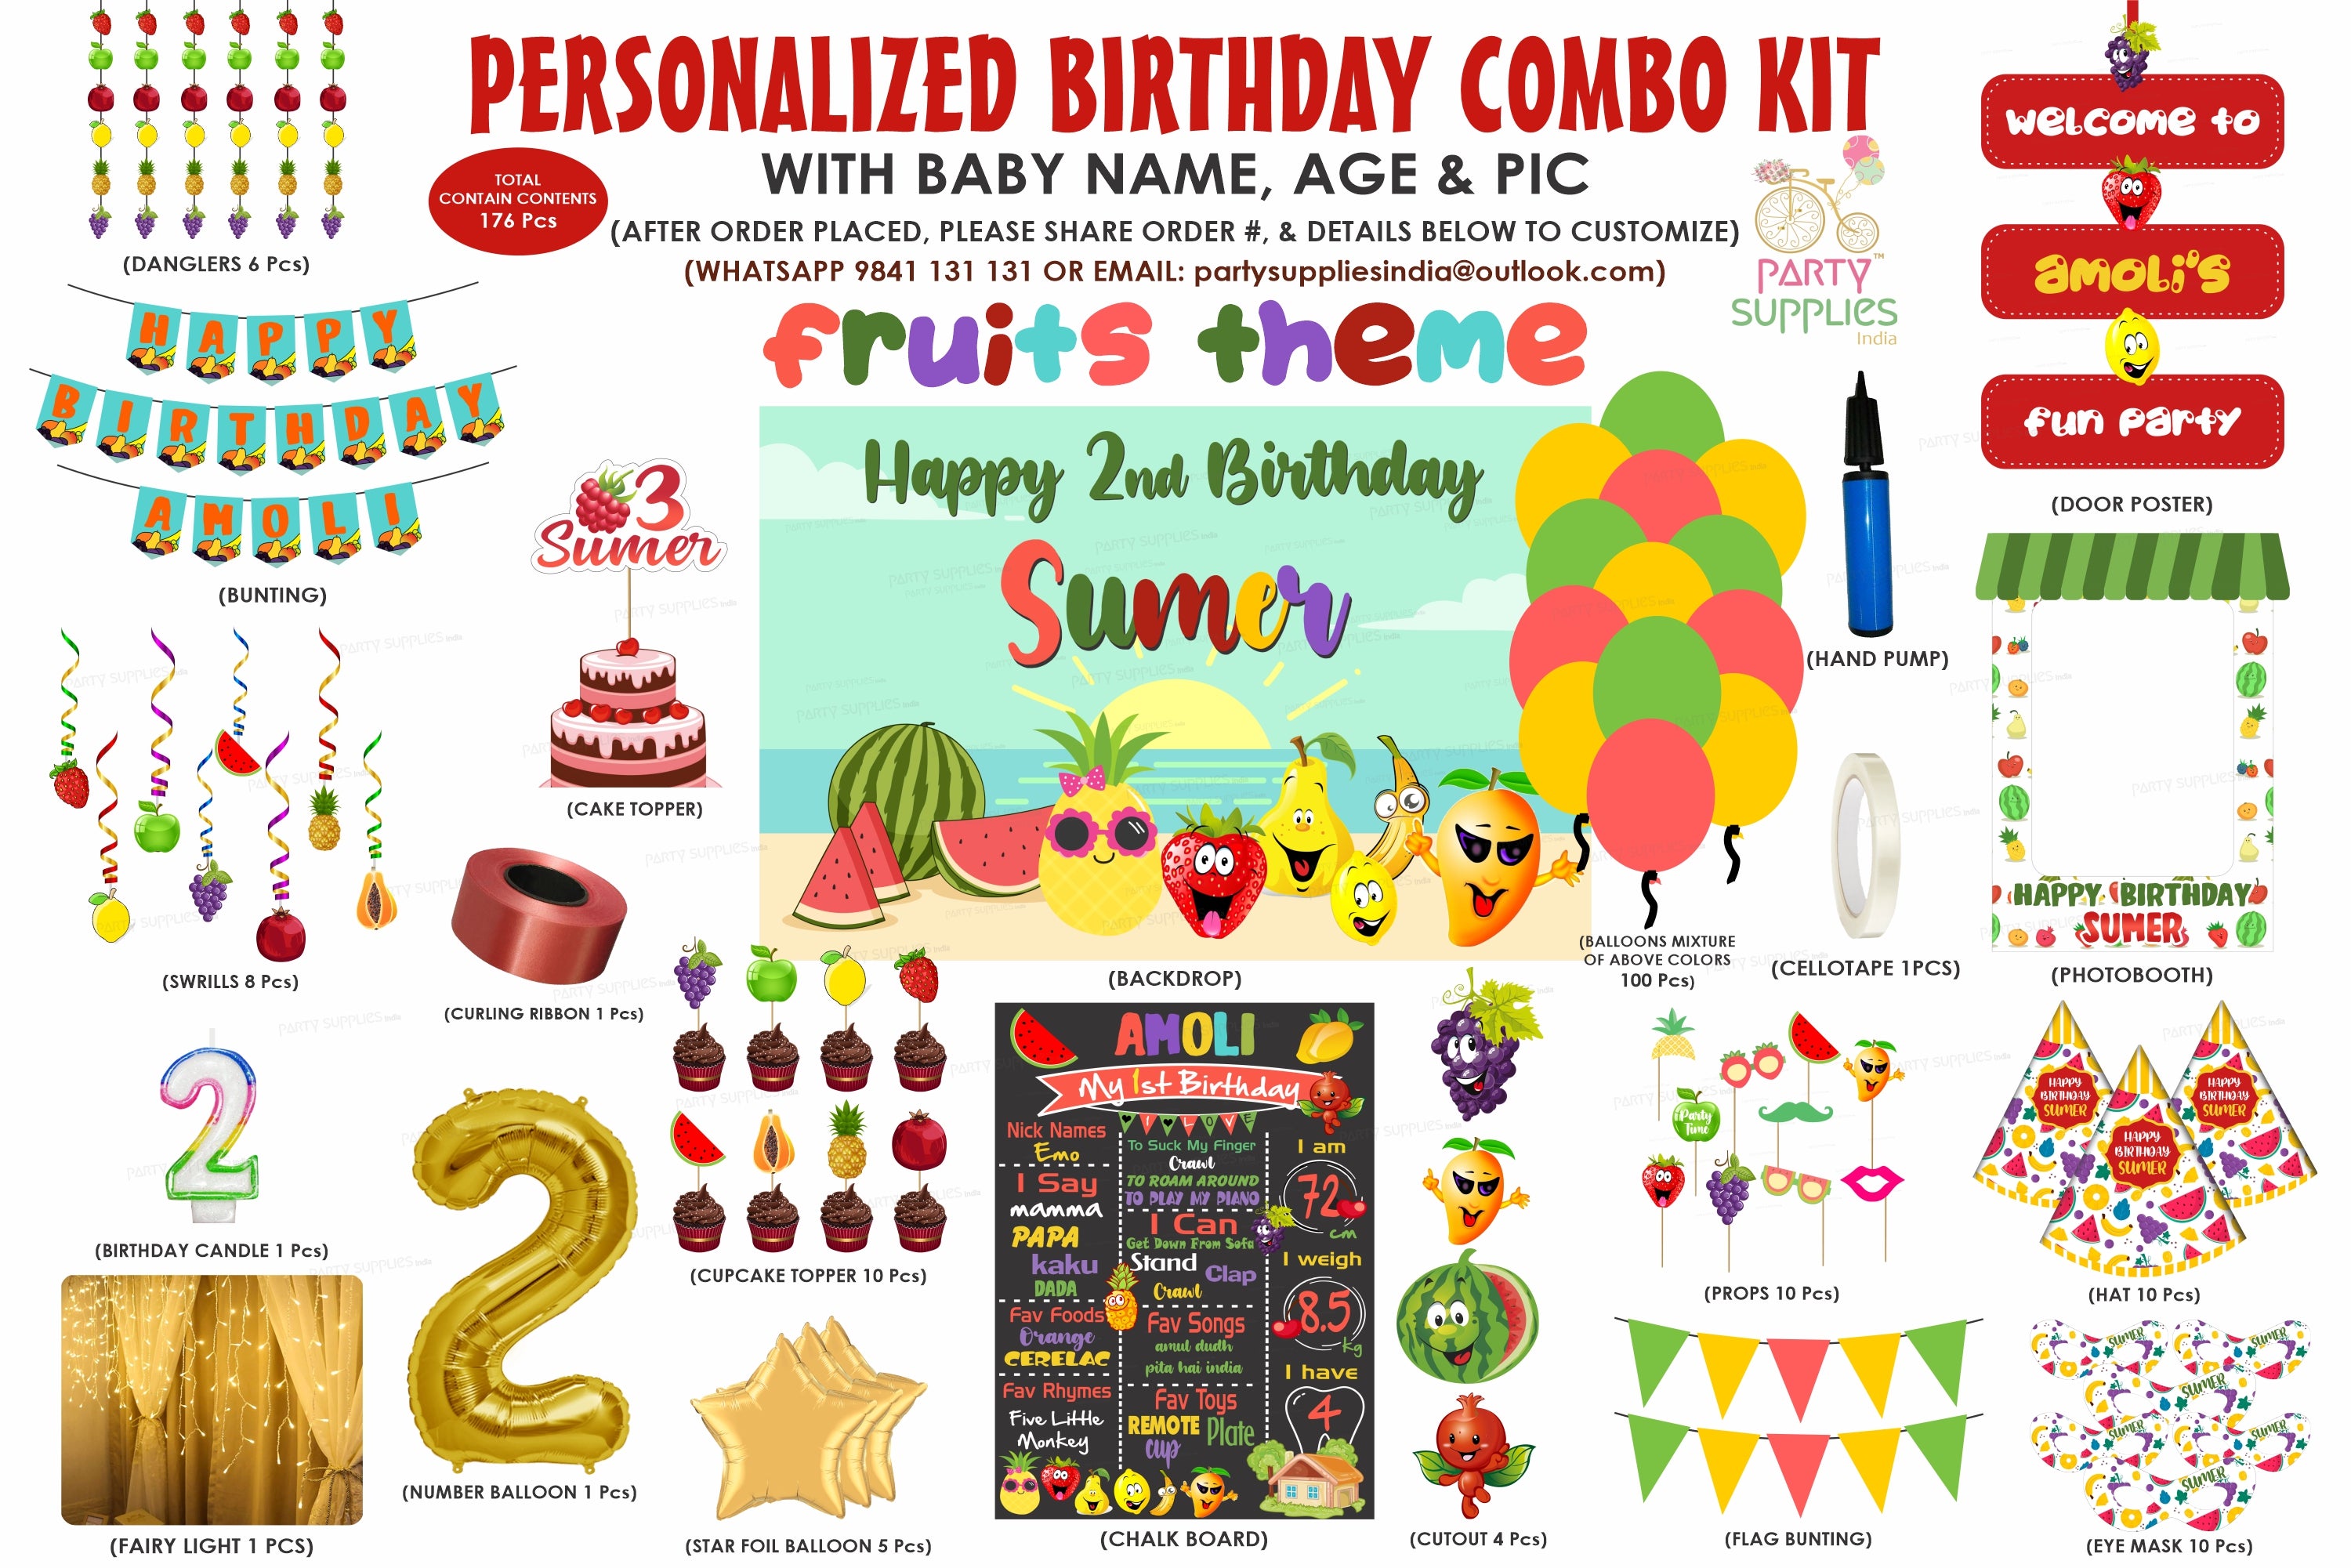 PSI Fruits Theme Premium Kit